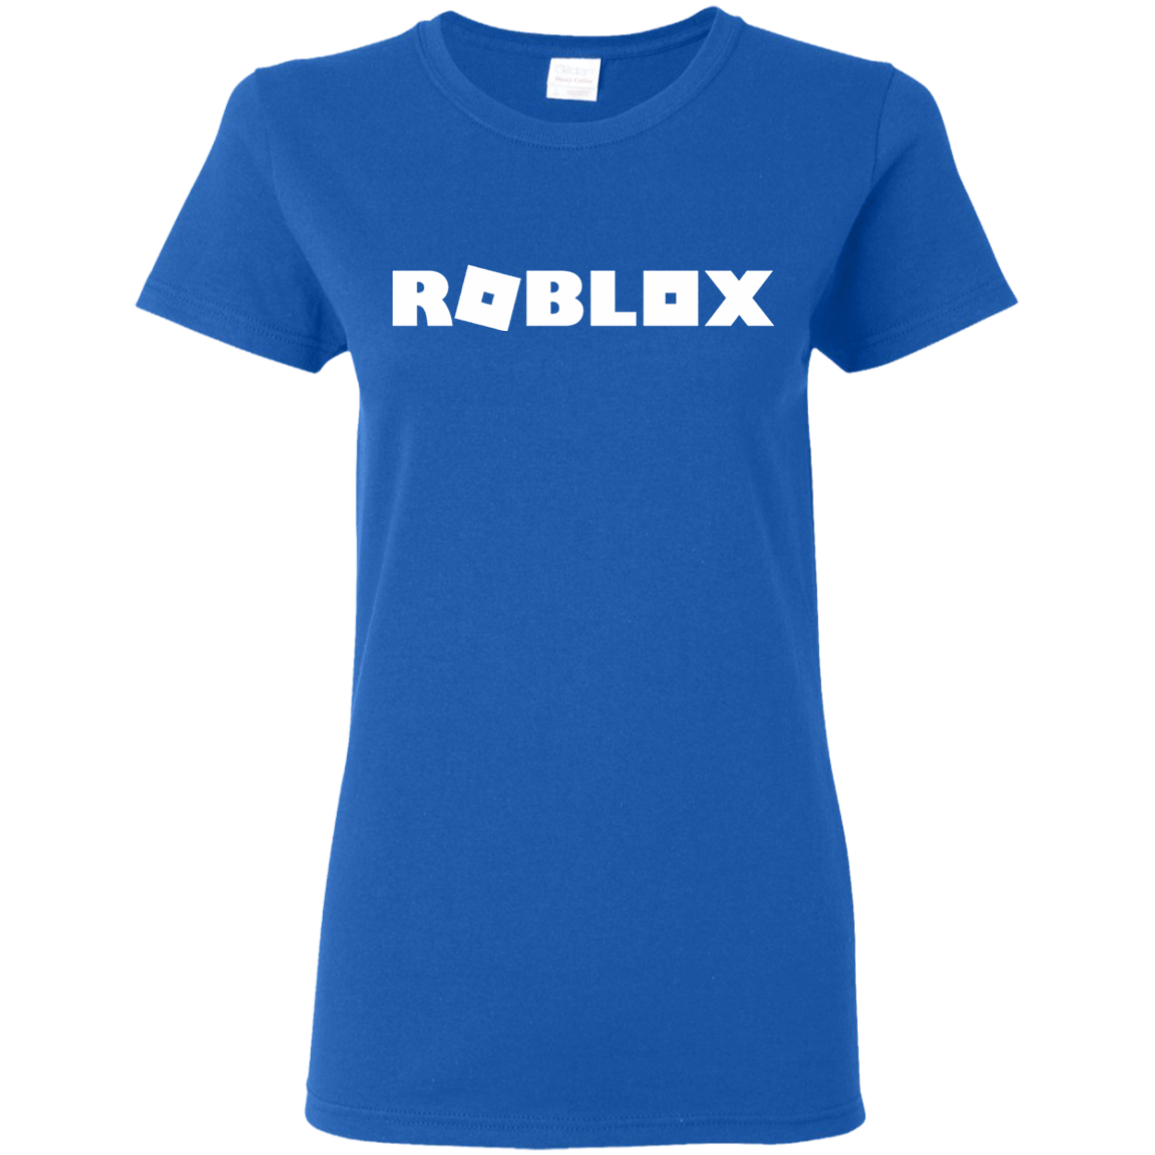 Roblox T Shirt Tutorial - Easy Robux Hack No Human Verification 2017 Nfl